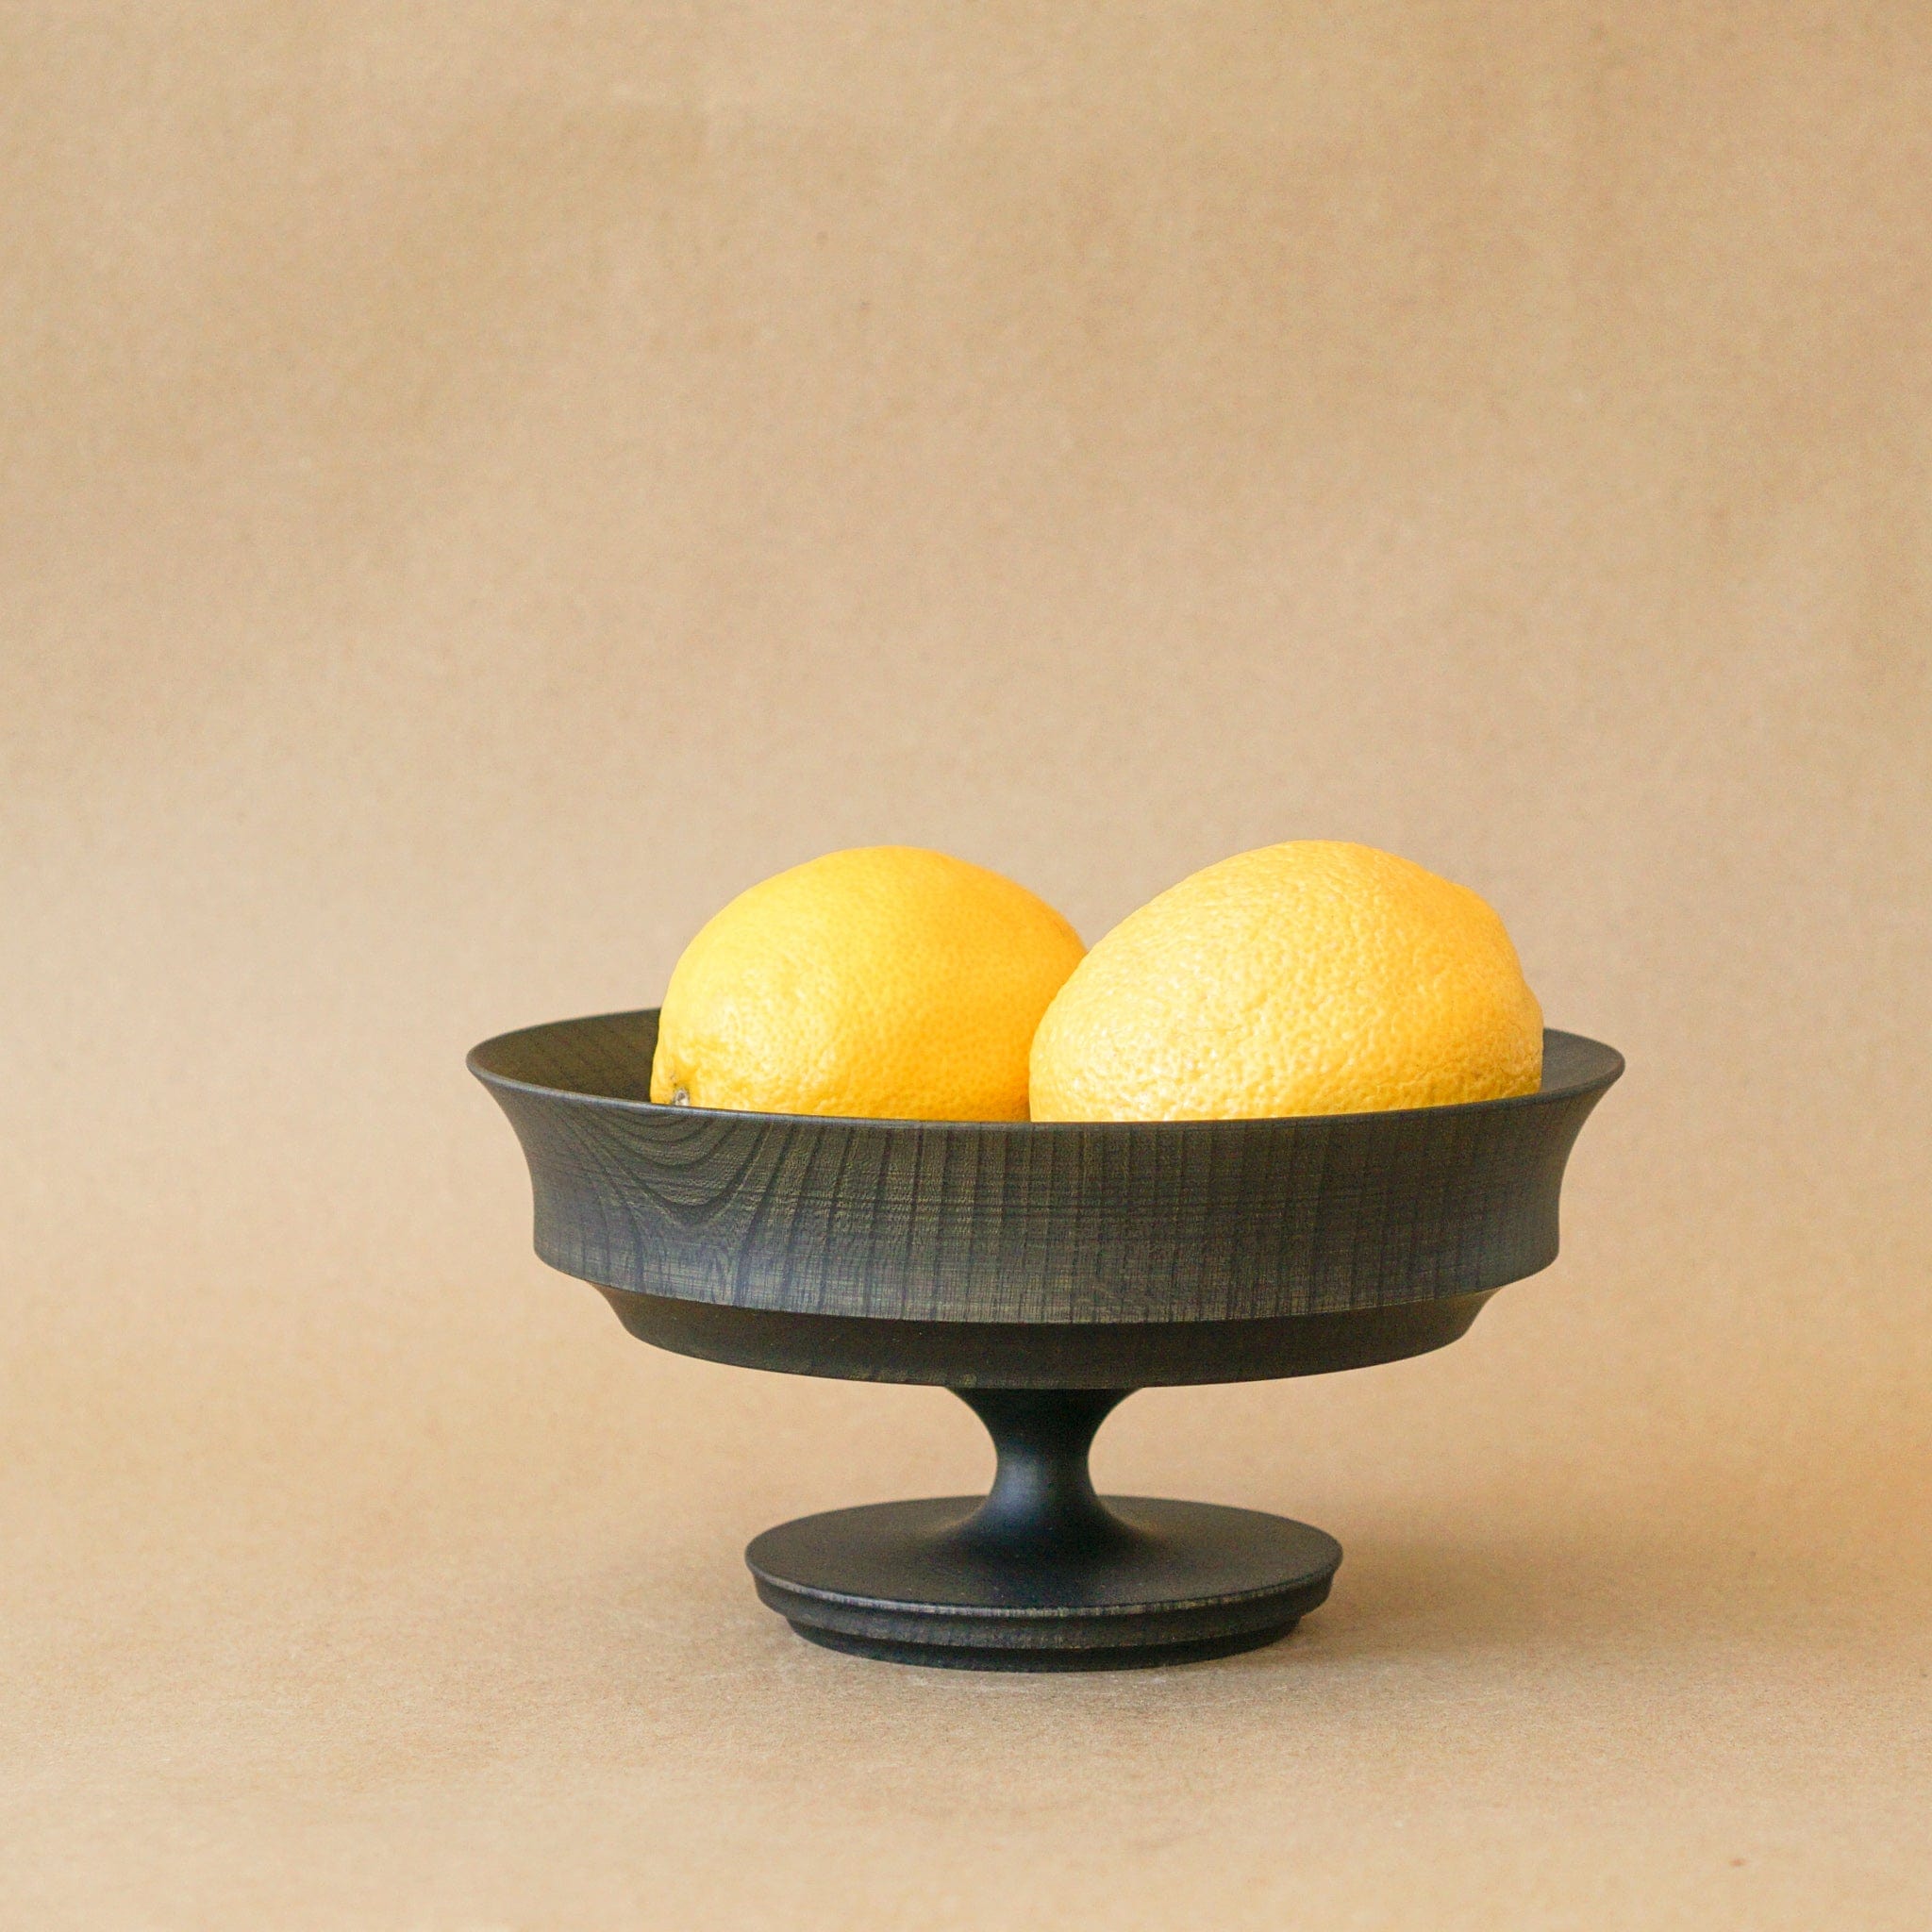 Morihata Decor Sinafu 6.0 Pedestal Stand Bowl in Black